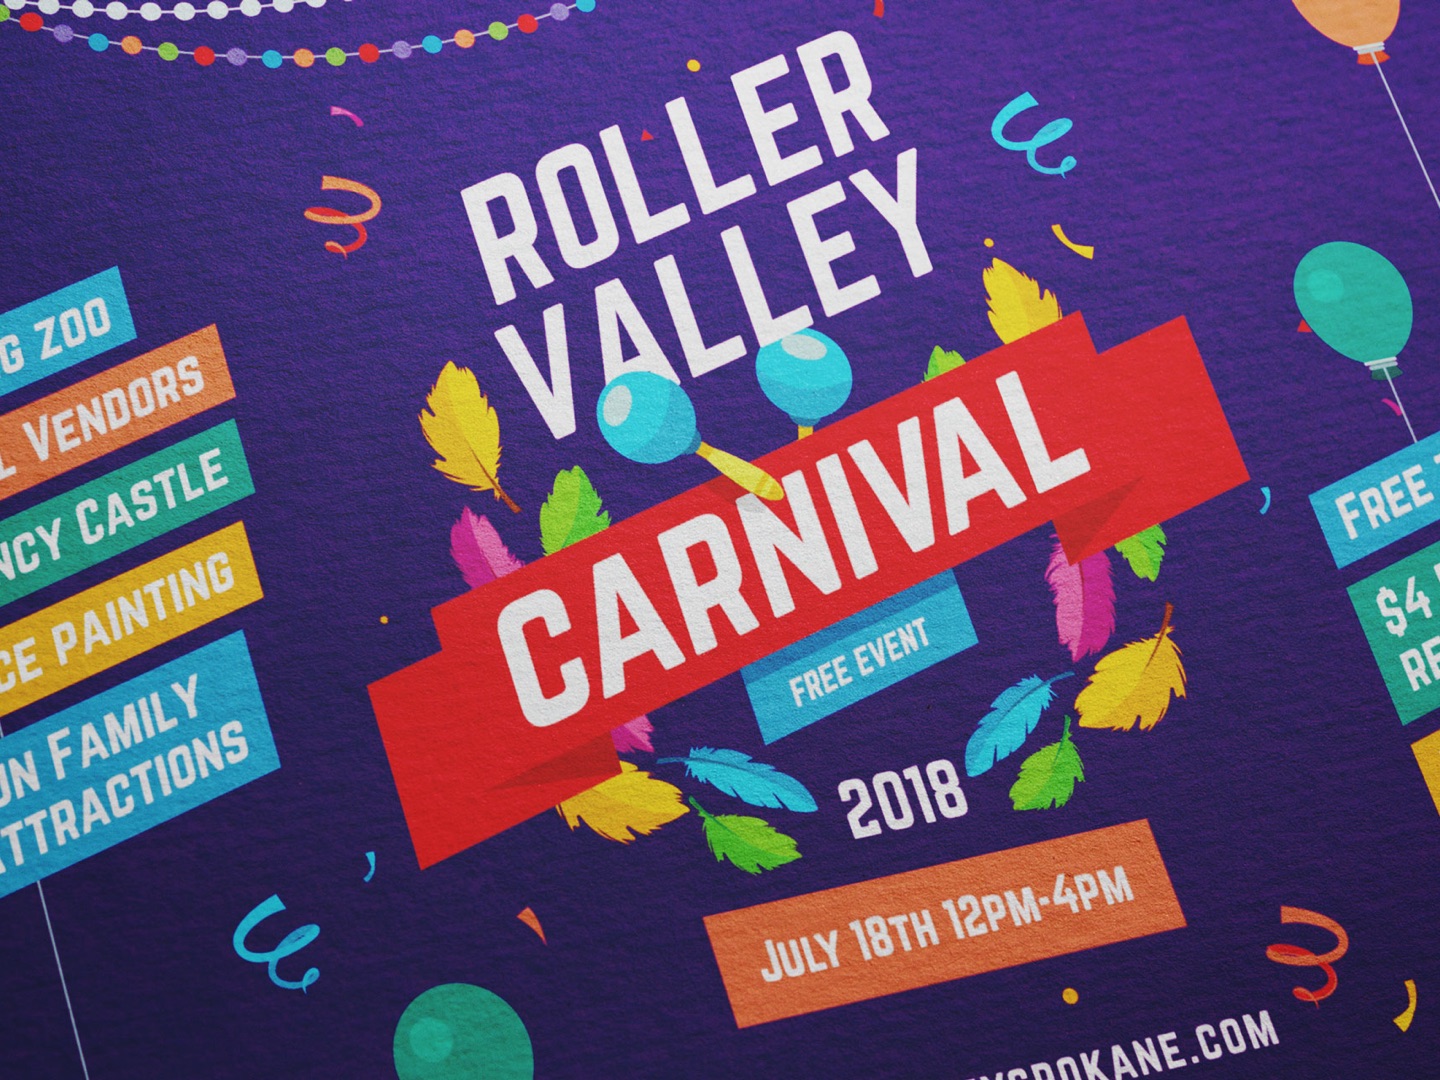 Roller Valley Carnival by Benjamin Oberemok on Dribbble